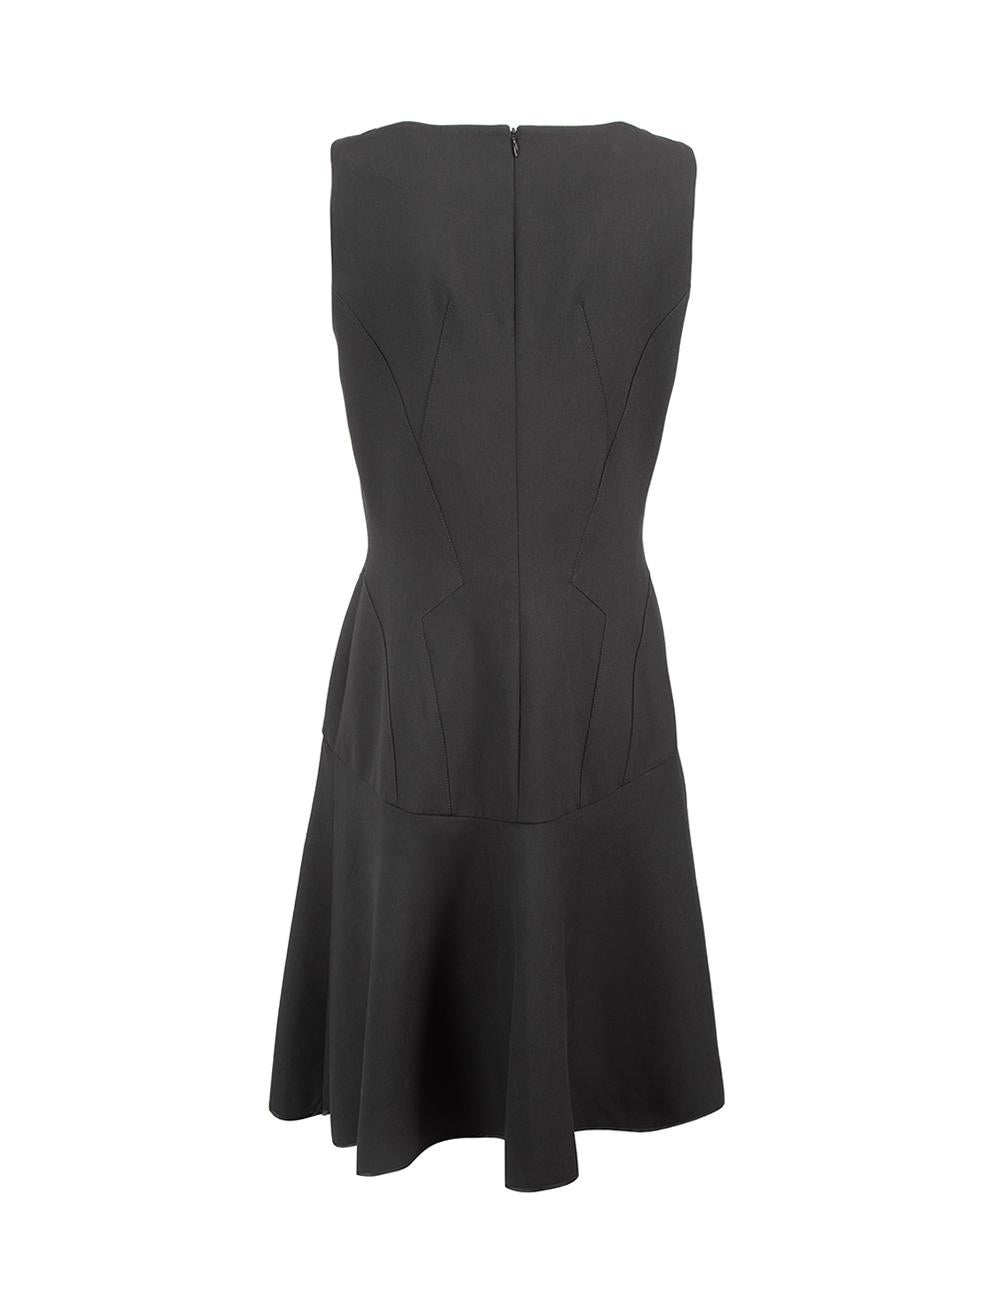 Amanda Wakeley Black V Neckline Midi Length Dress Size L In Good Condition For Sale In London, GB